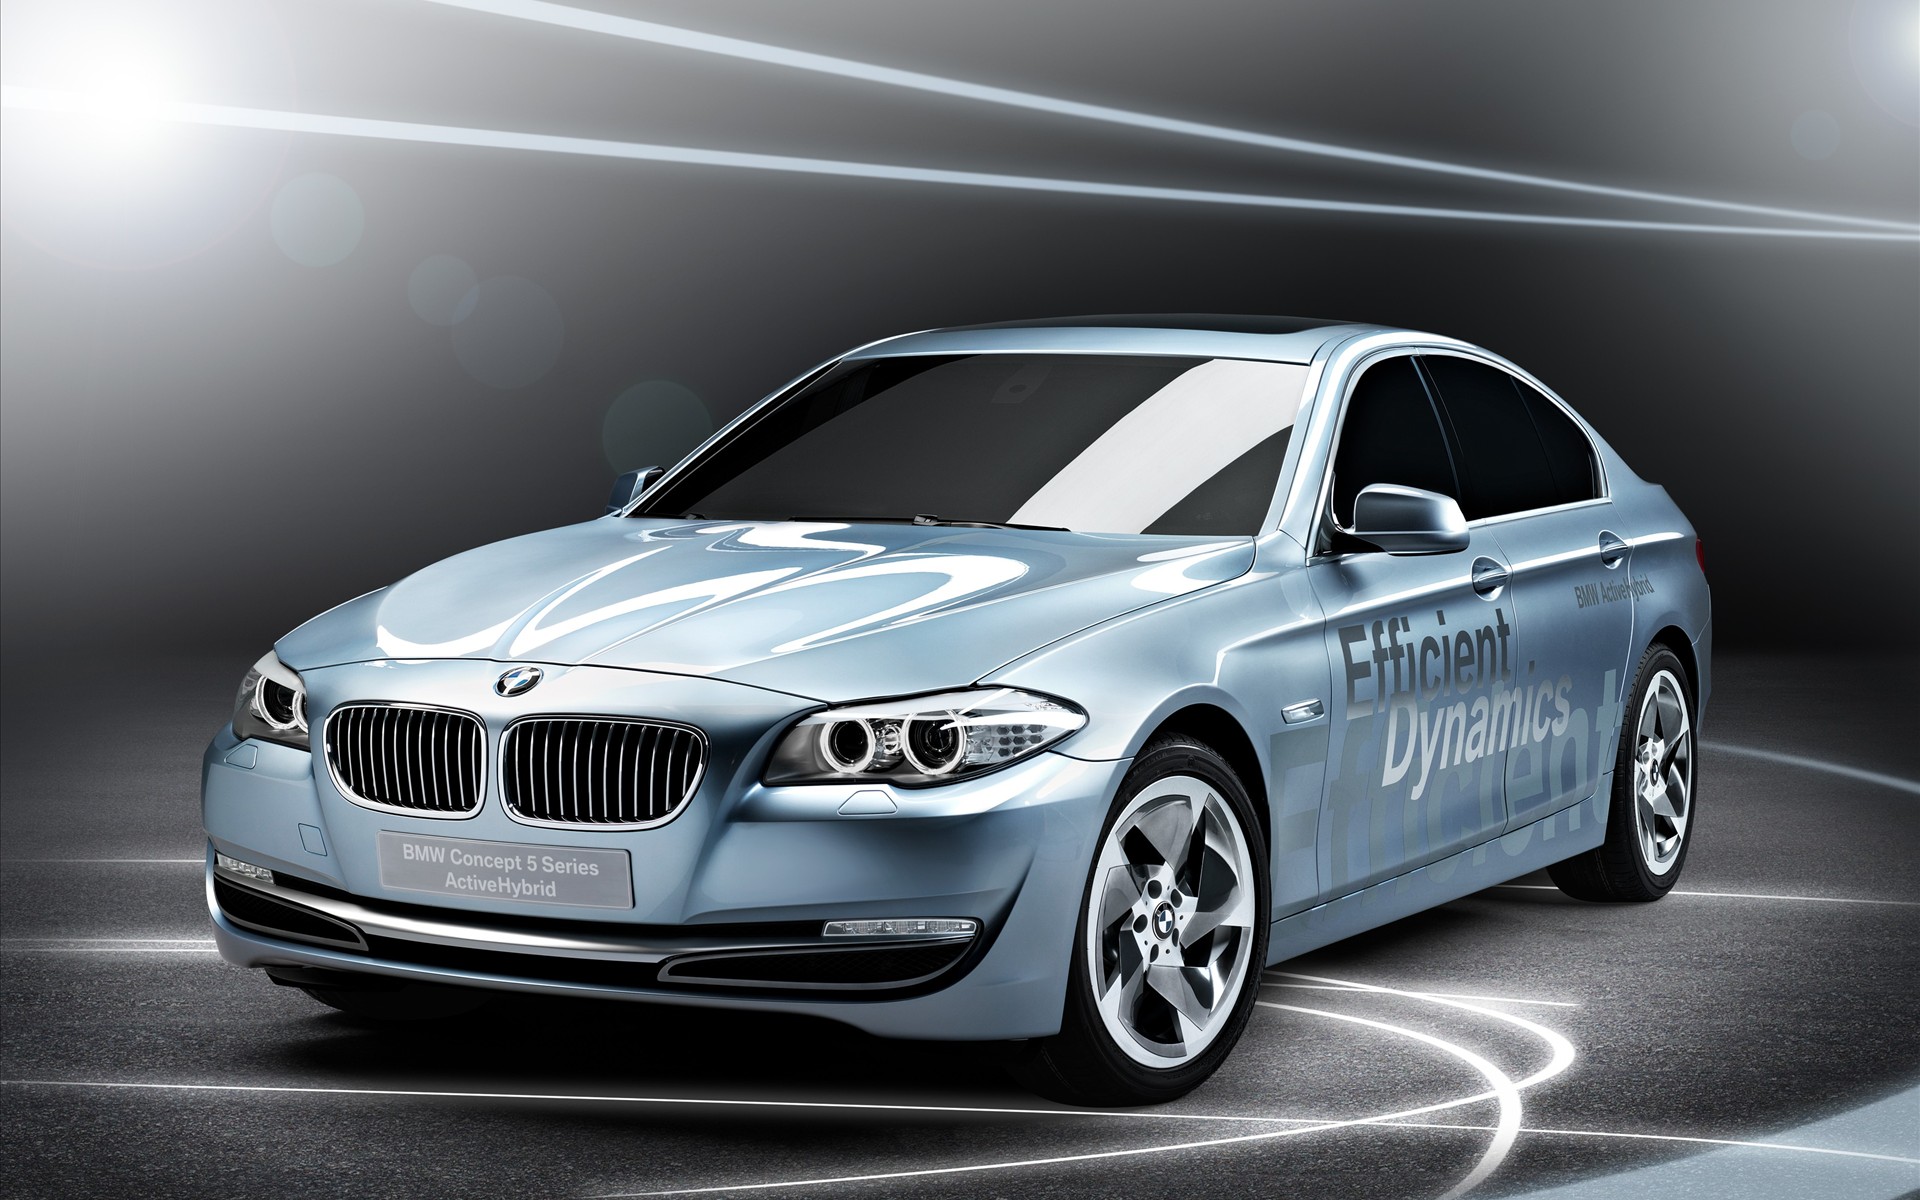 2010 BMW Series 5 Active Hybrid Concept